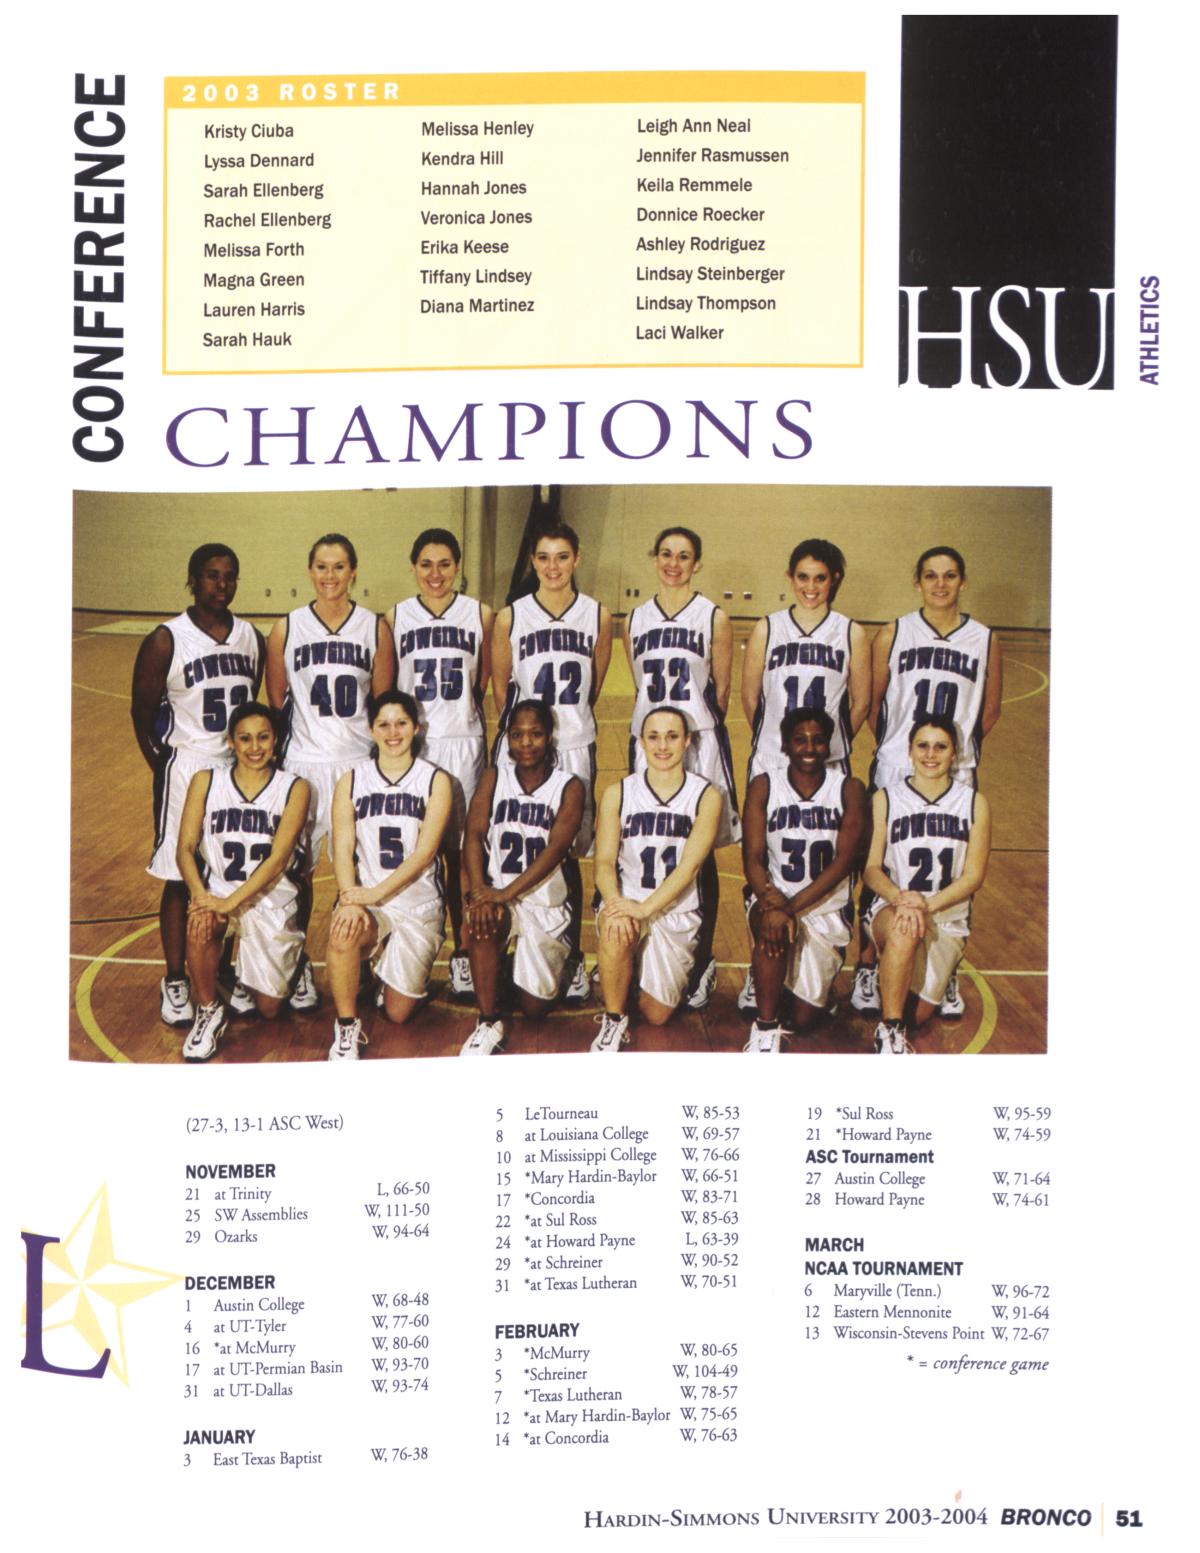 The Bronco, Yearbook of Hardin-Simmons University, 2004
                                                
                                                    51
                                                